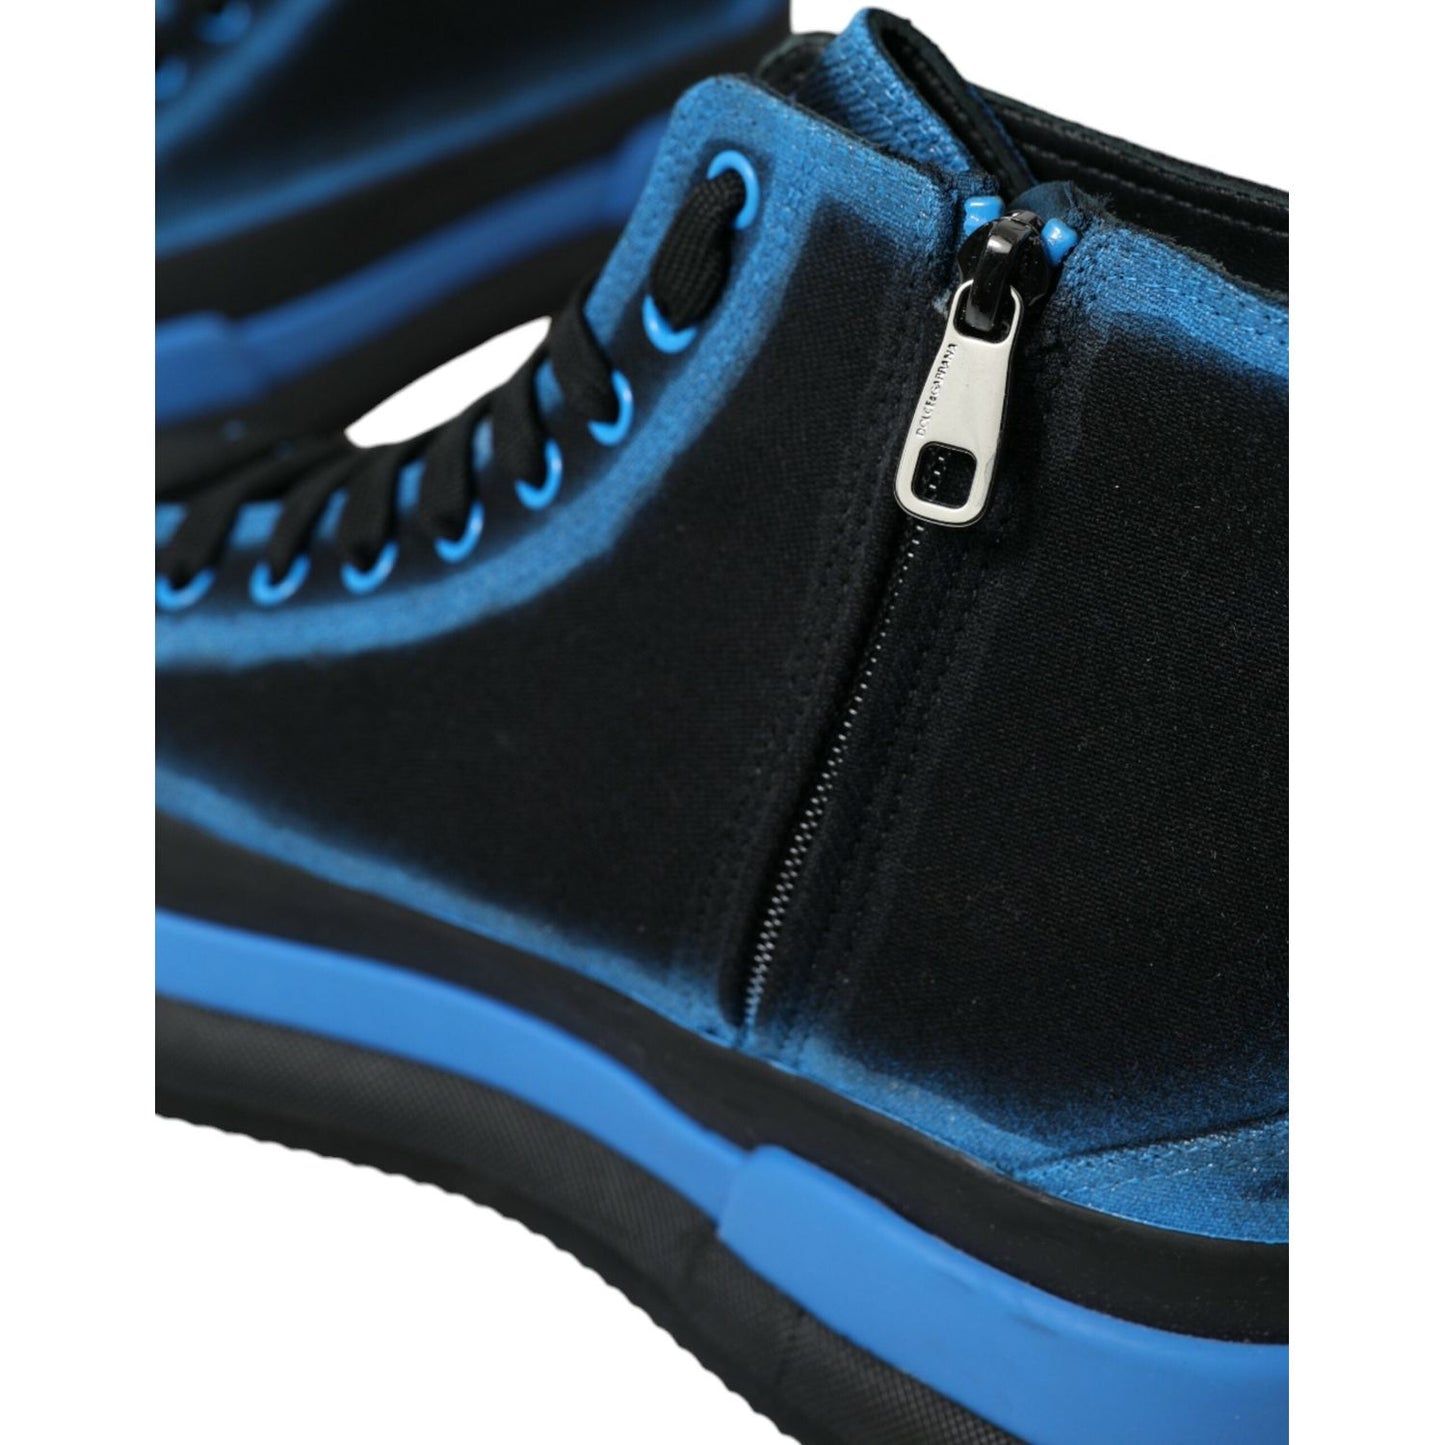 Dolce & Gabbana Elegant High-Top Canvas Sneakers black-blue-canvas-cotton-high-top-sneakers-shoes